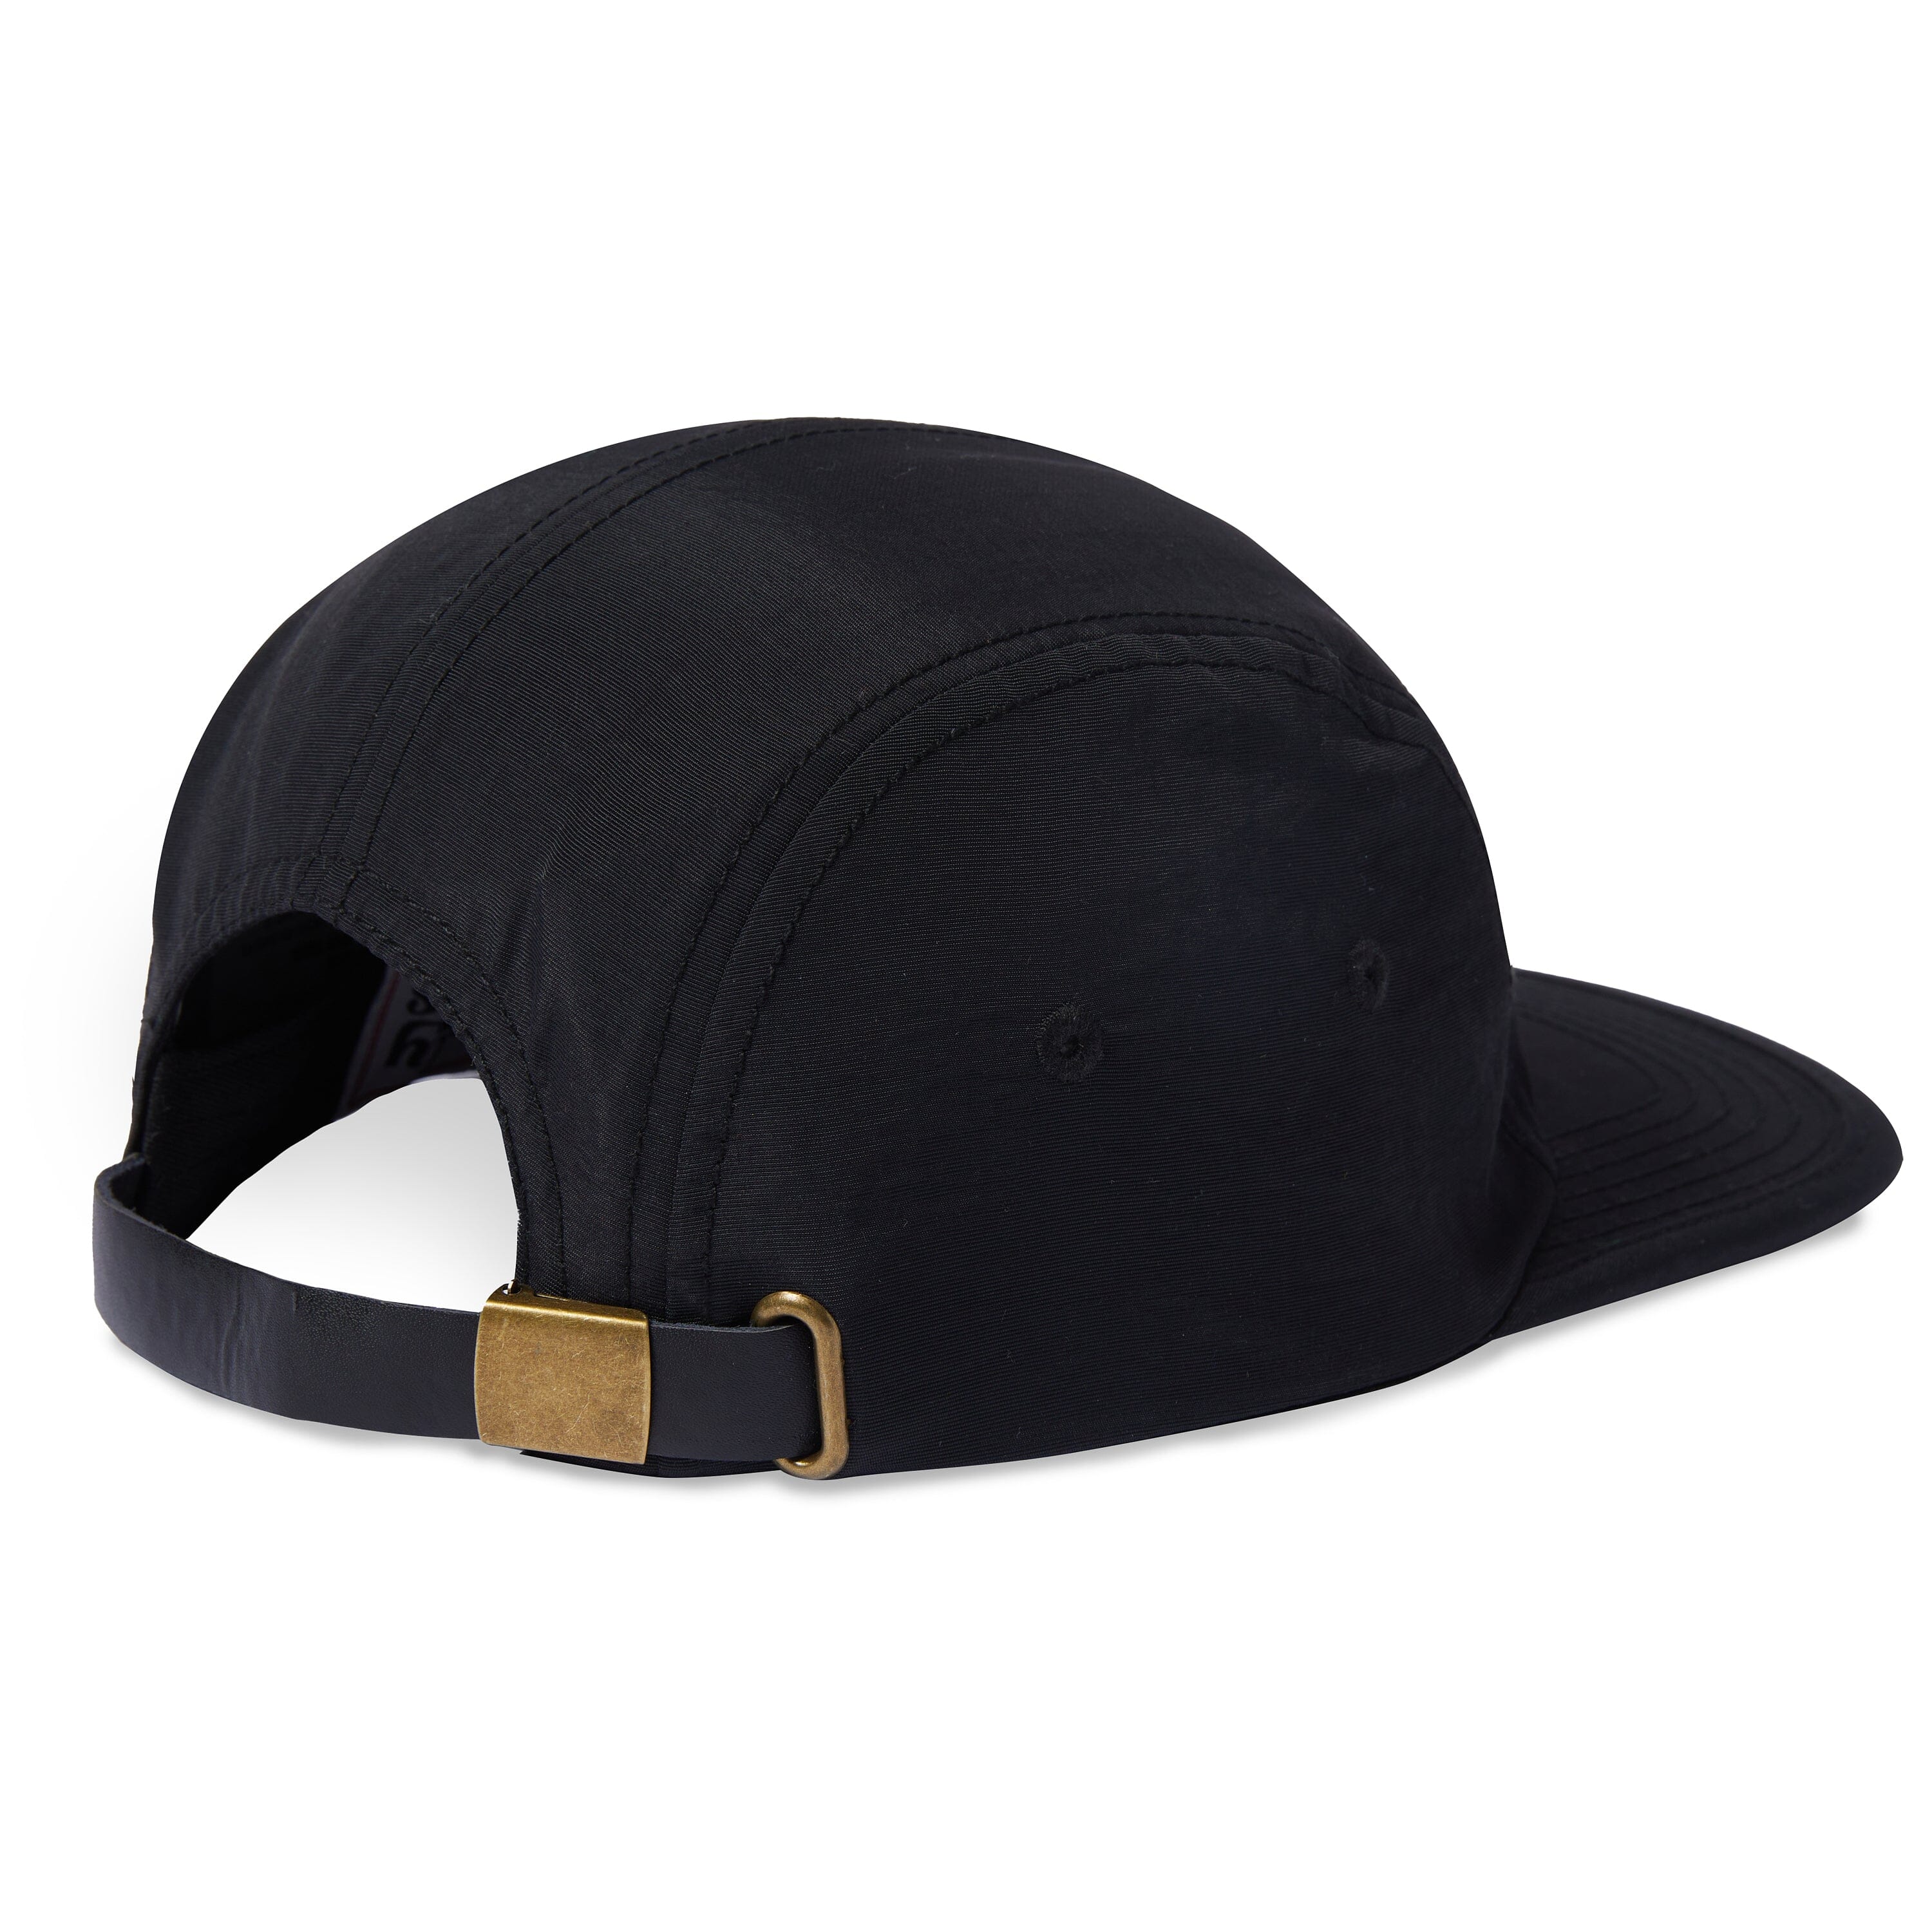 RETRIEVER TWILL 6-PANEL HAT - BLACK HATS PARTY PANTS 